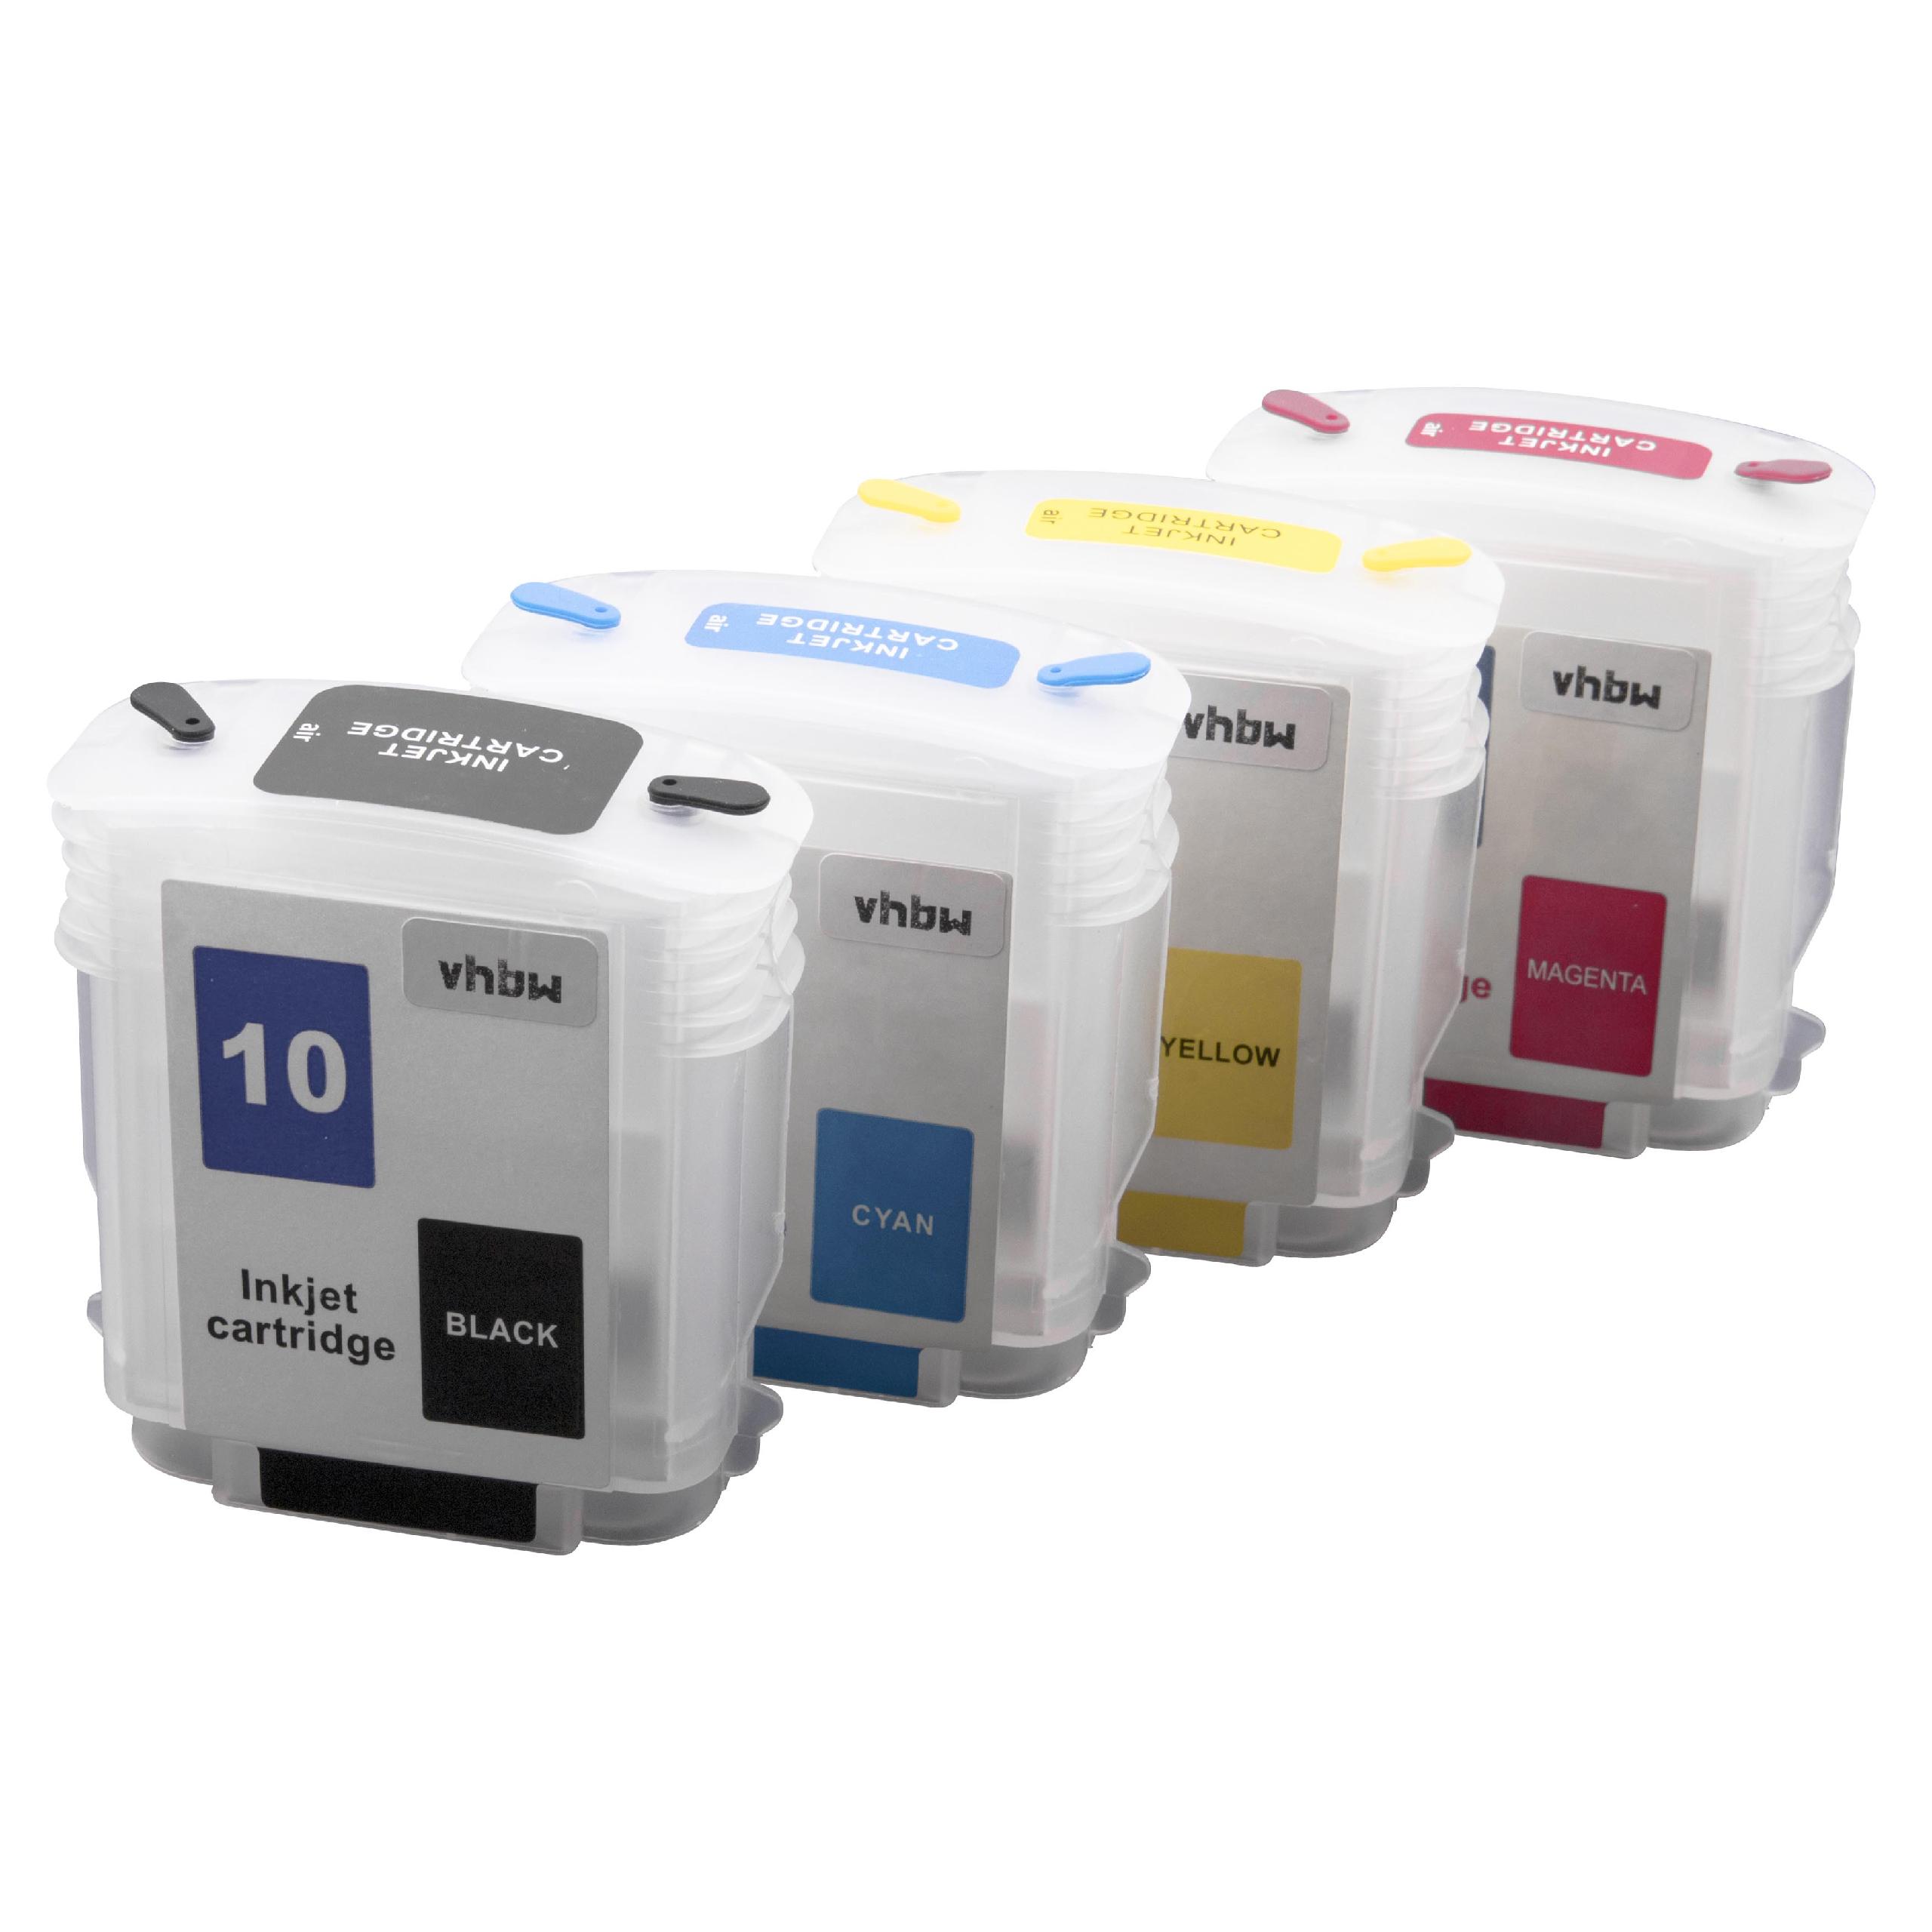 4x Cartucho tinta reemplaza HP 82, 10, C4913A, C4911, C4844 para impresora CISS HP - B/C/M/Y + chip